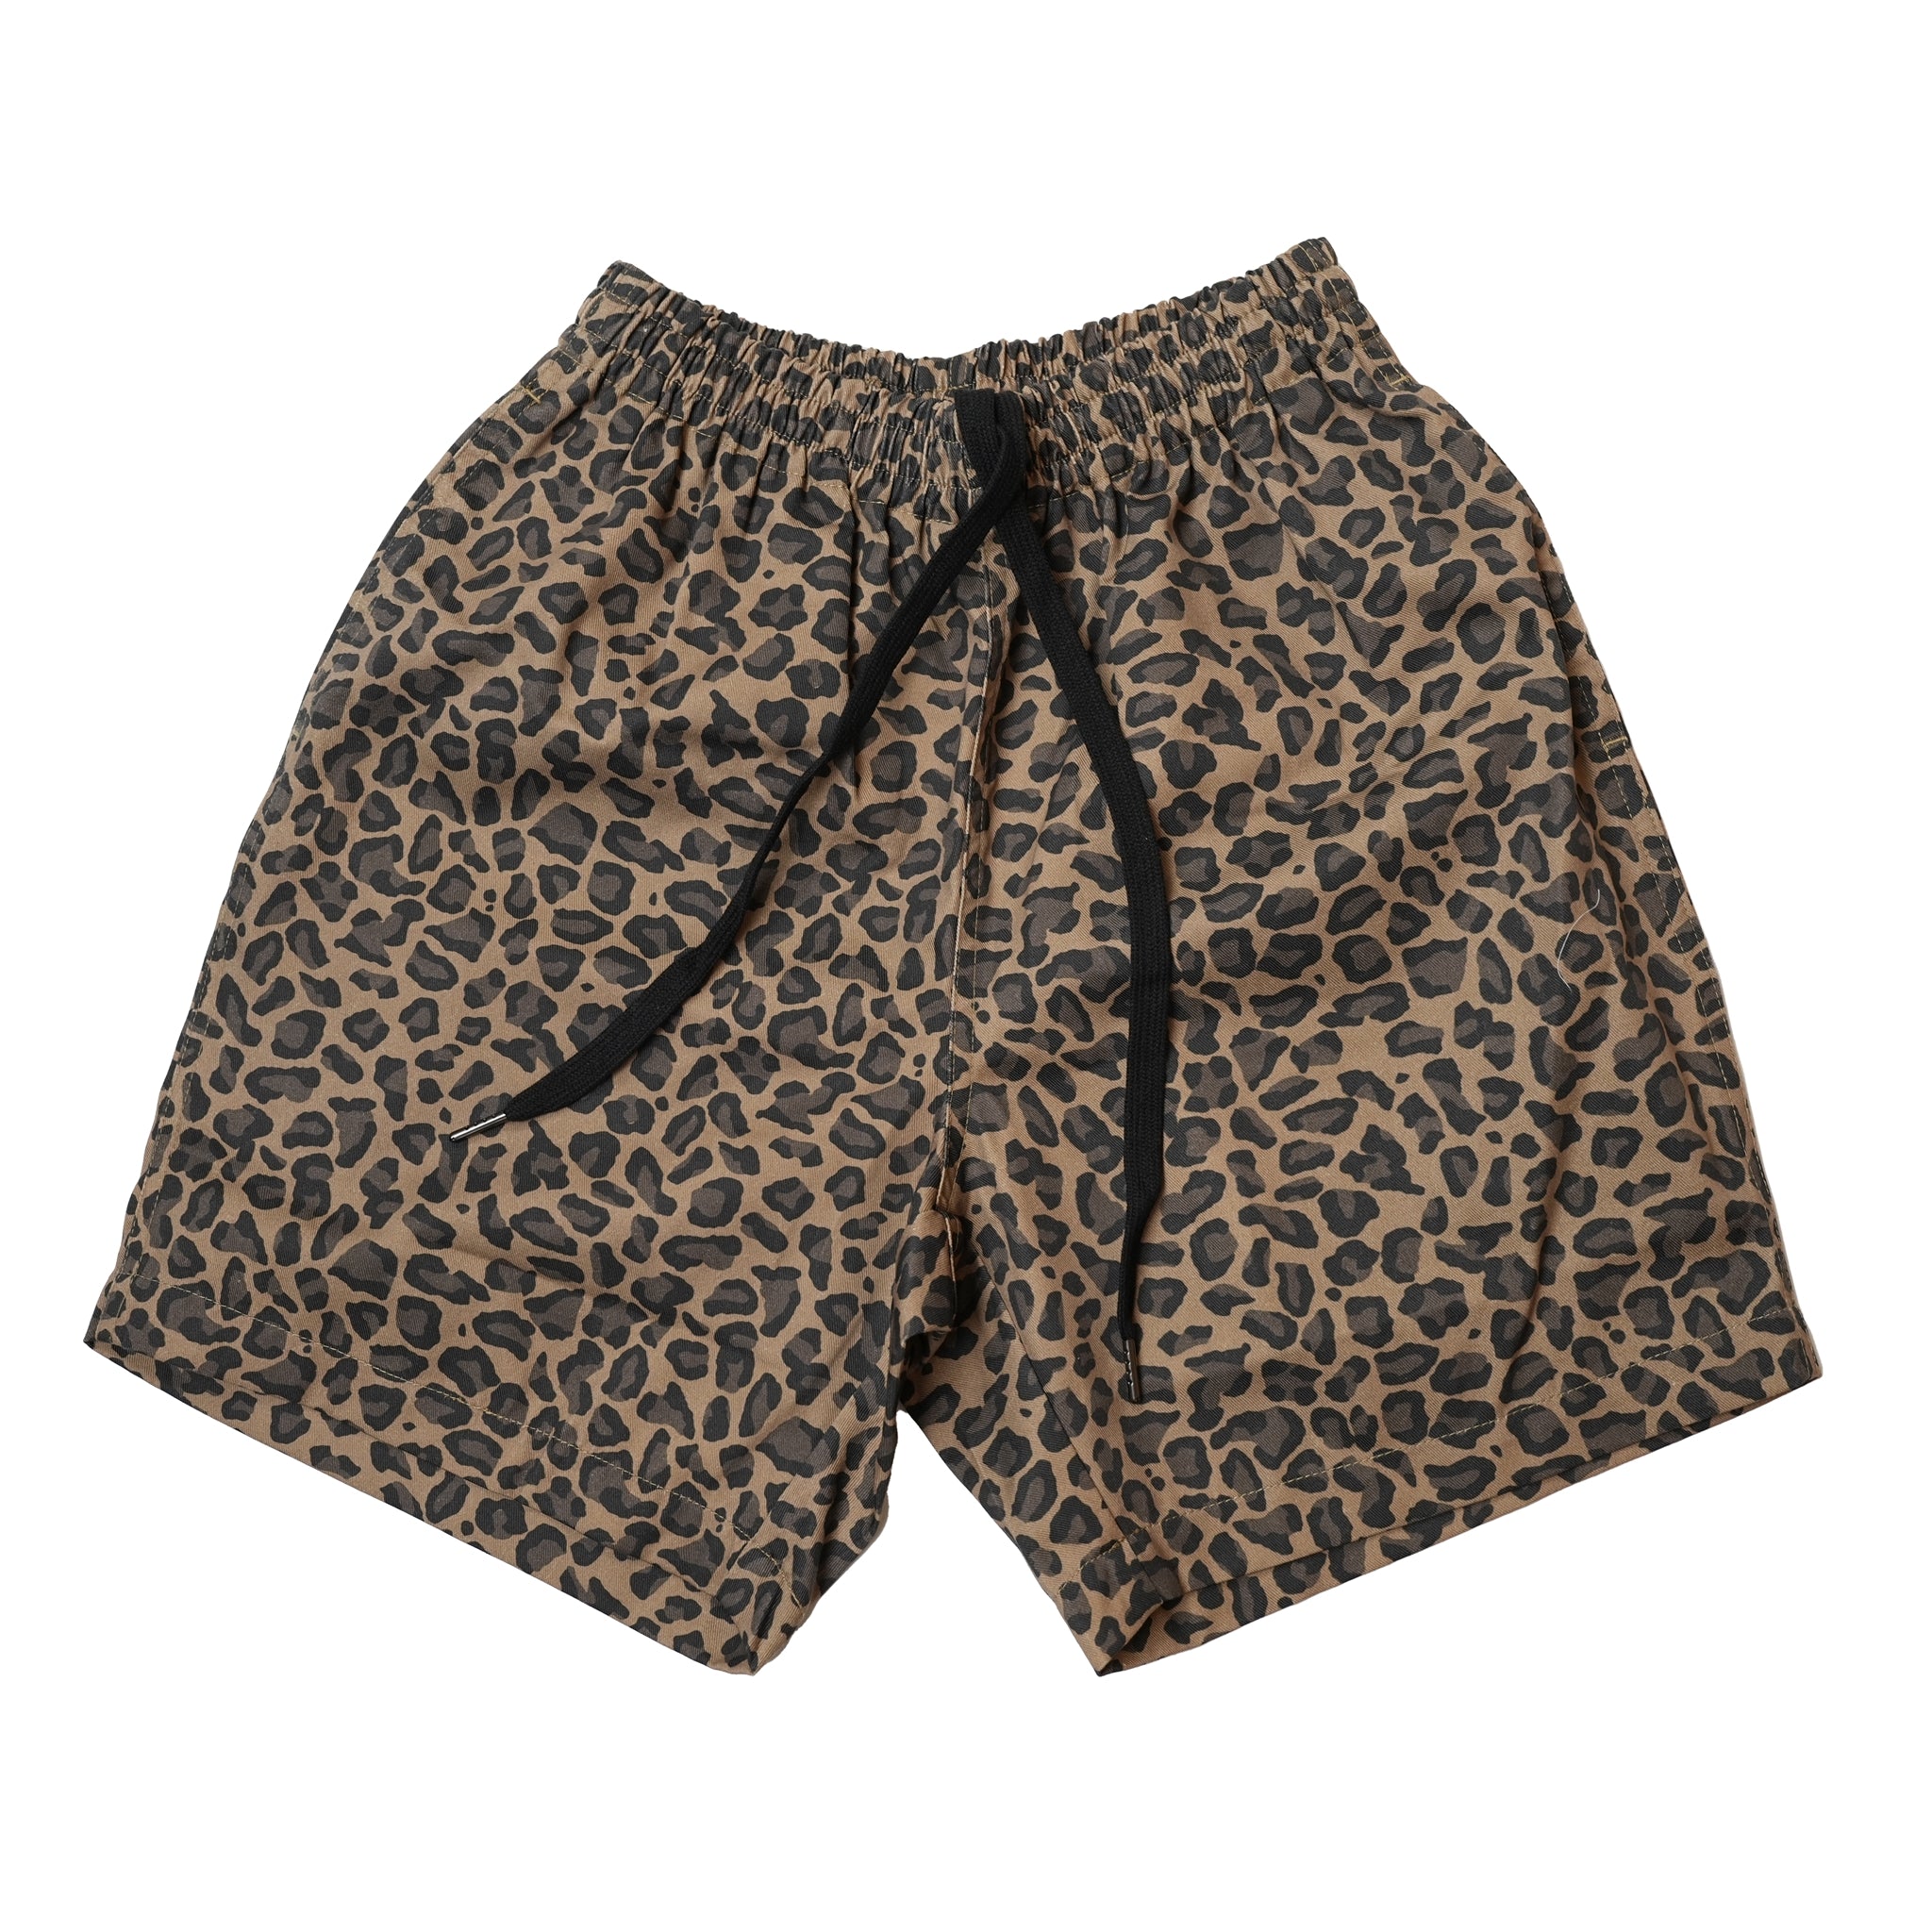 No:je199-144 | Name:ANIMAL SERIES-SHORT PANTS | Color:Cow/Leopard/Camo【JEMORGAN LONG JOHNS_ジェーイーモーガンロングジョーンズ】